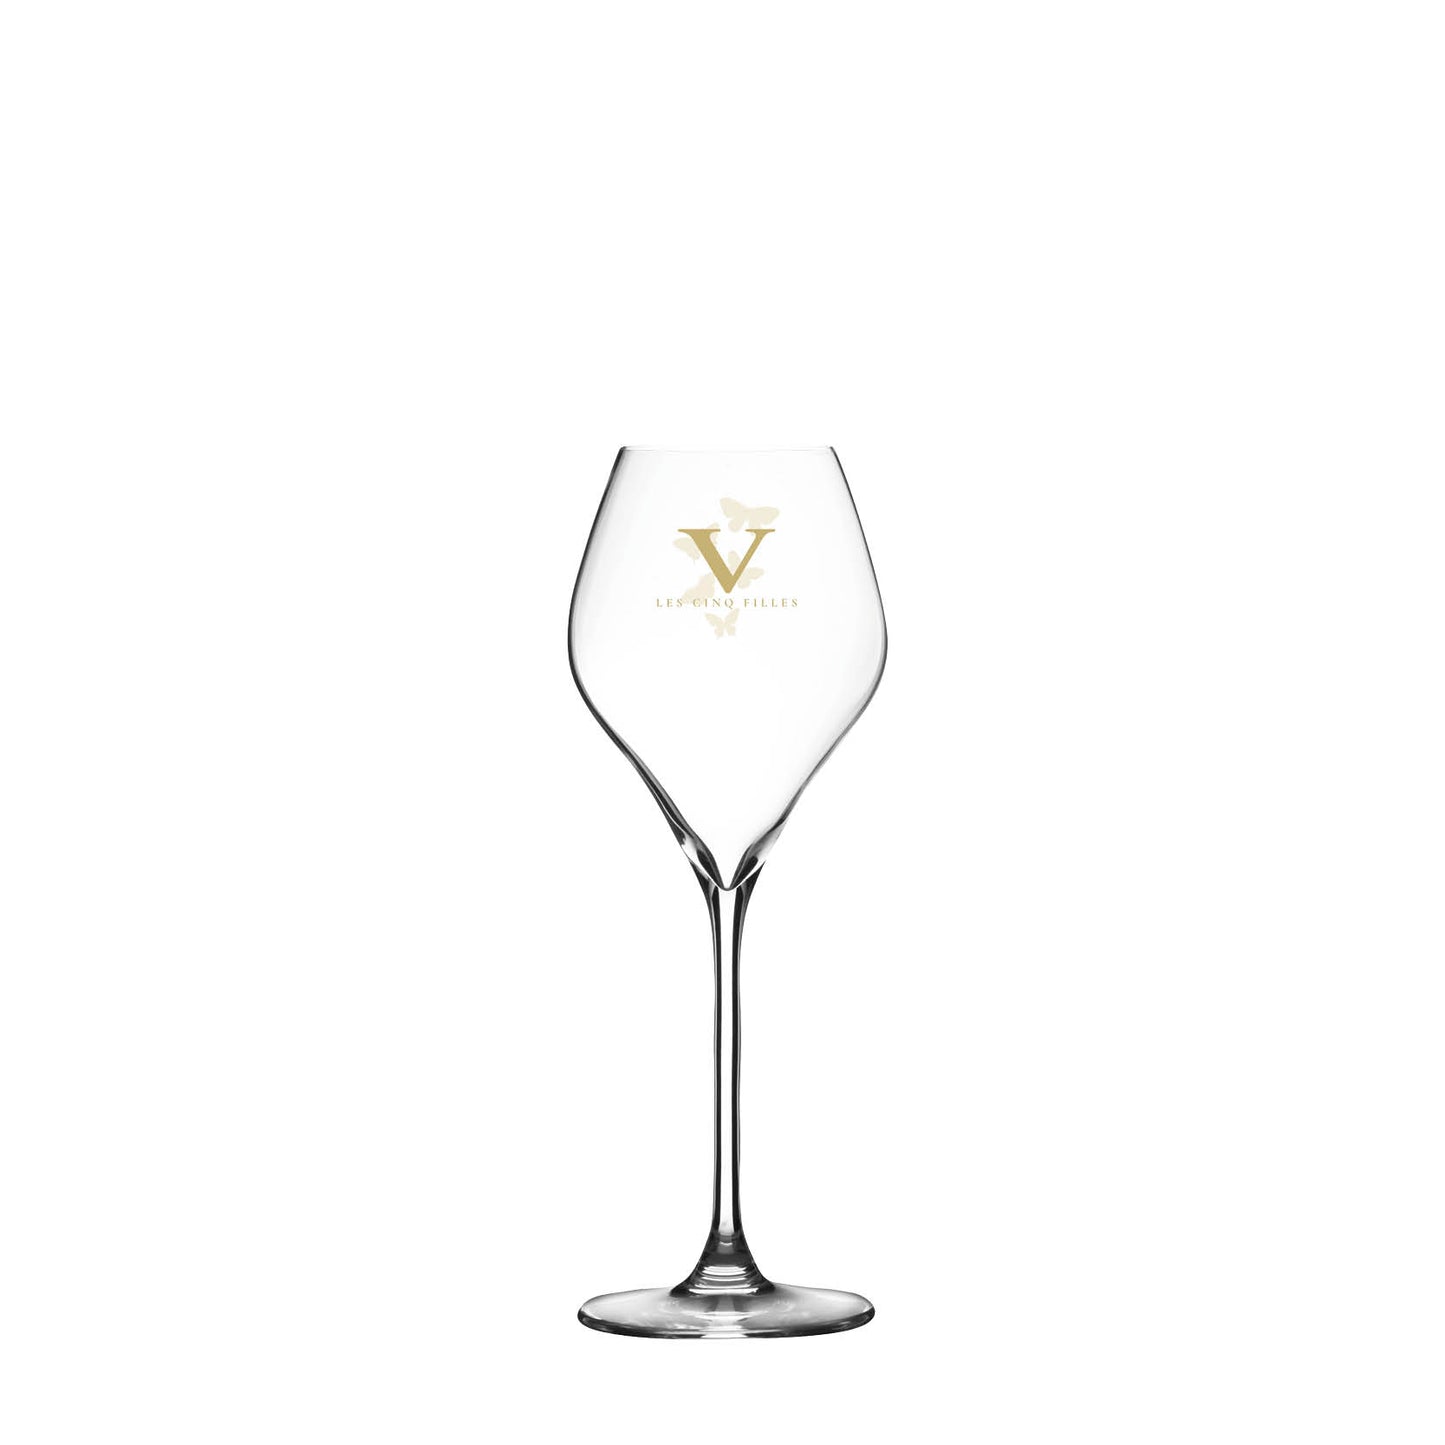 Filles Les – all YSC Cinq Champagne